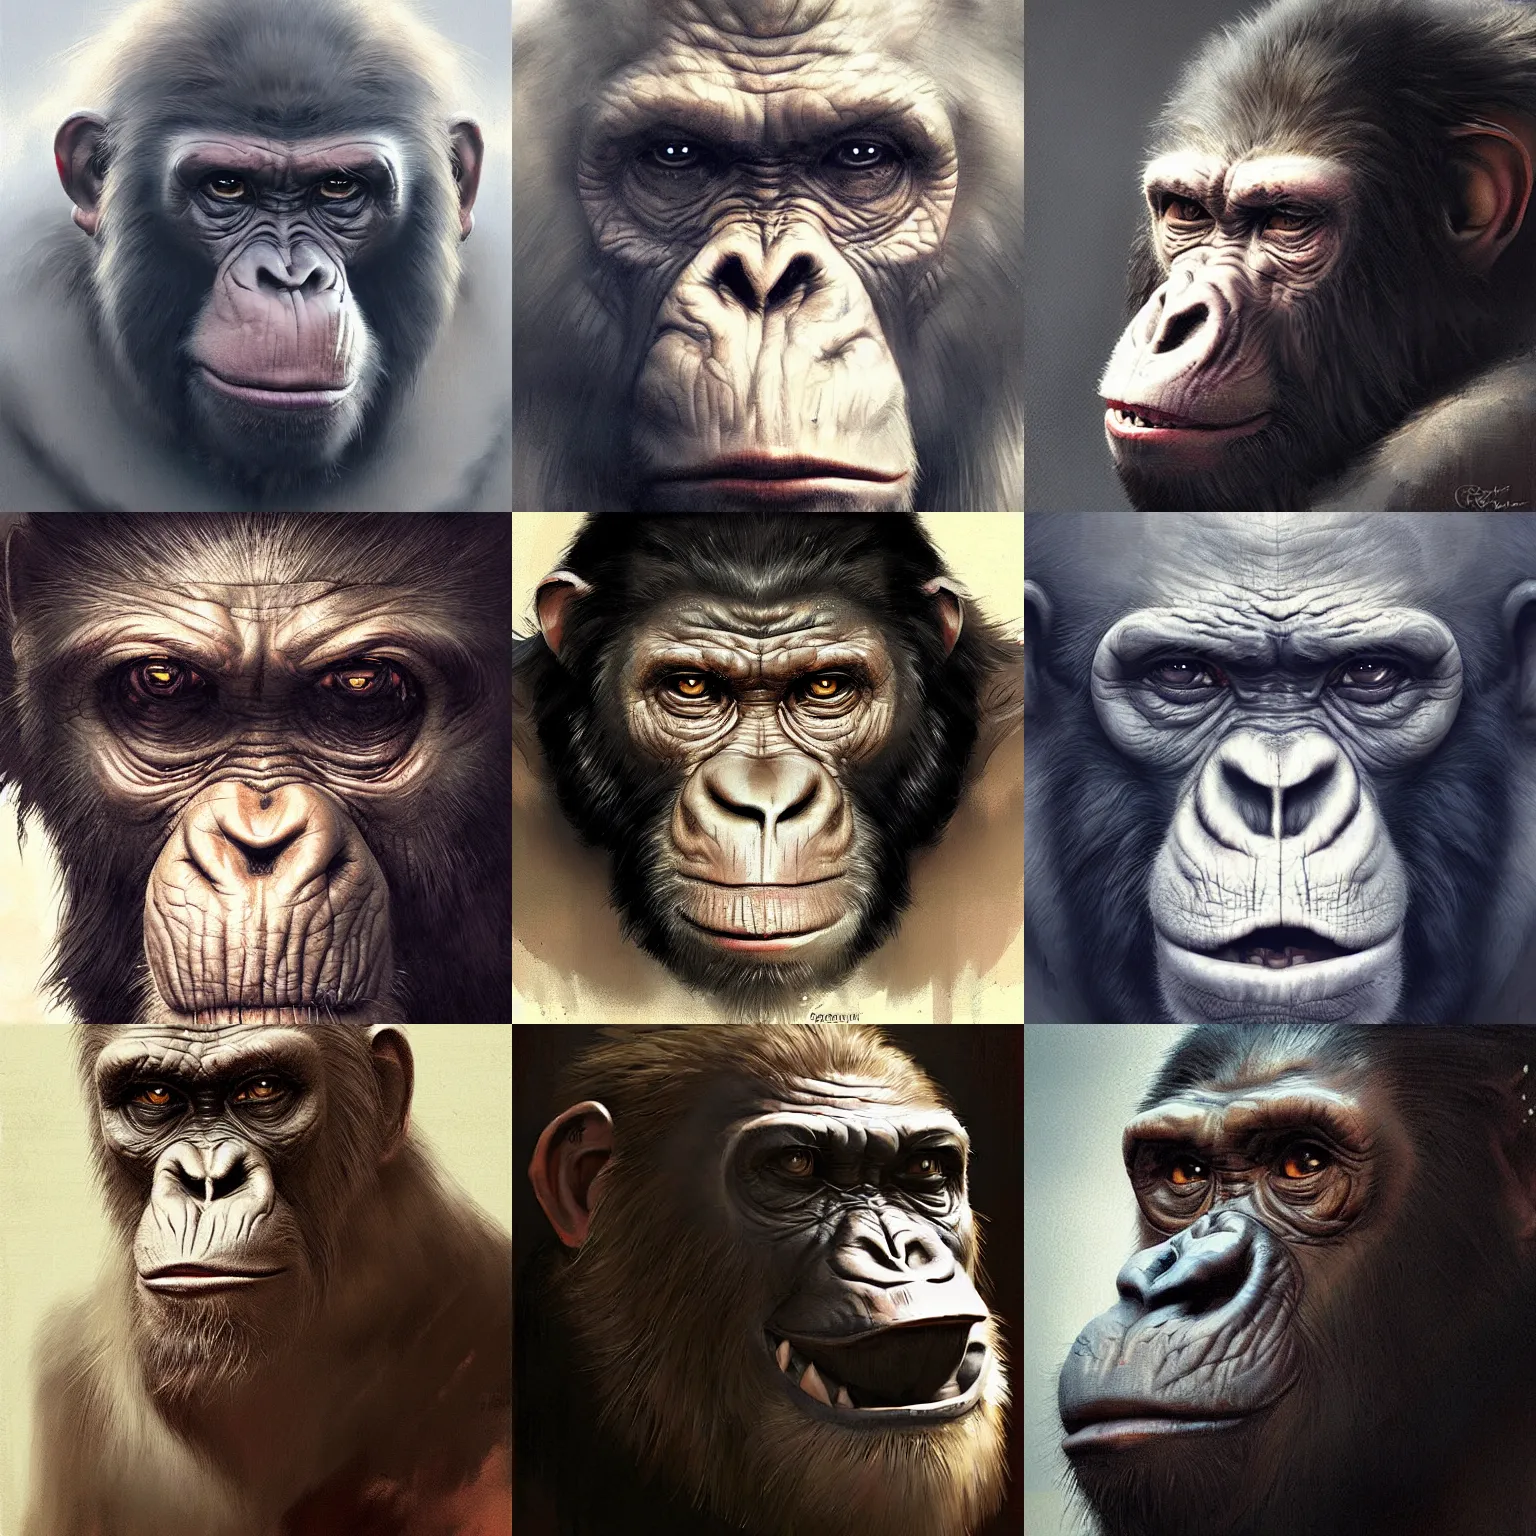 Prompt: portrait of bored ape nft,digital art,ultra realistic,ultra detailed,art by greg rutkowski